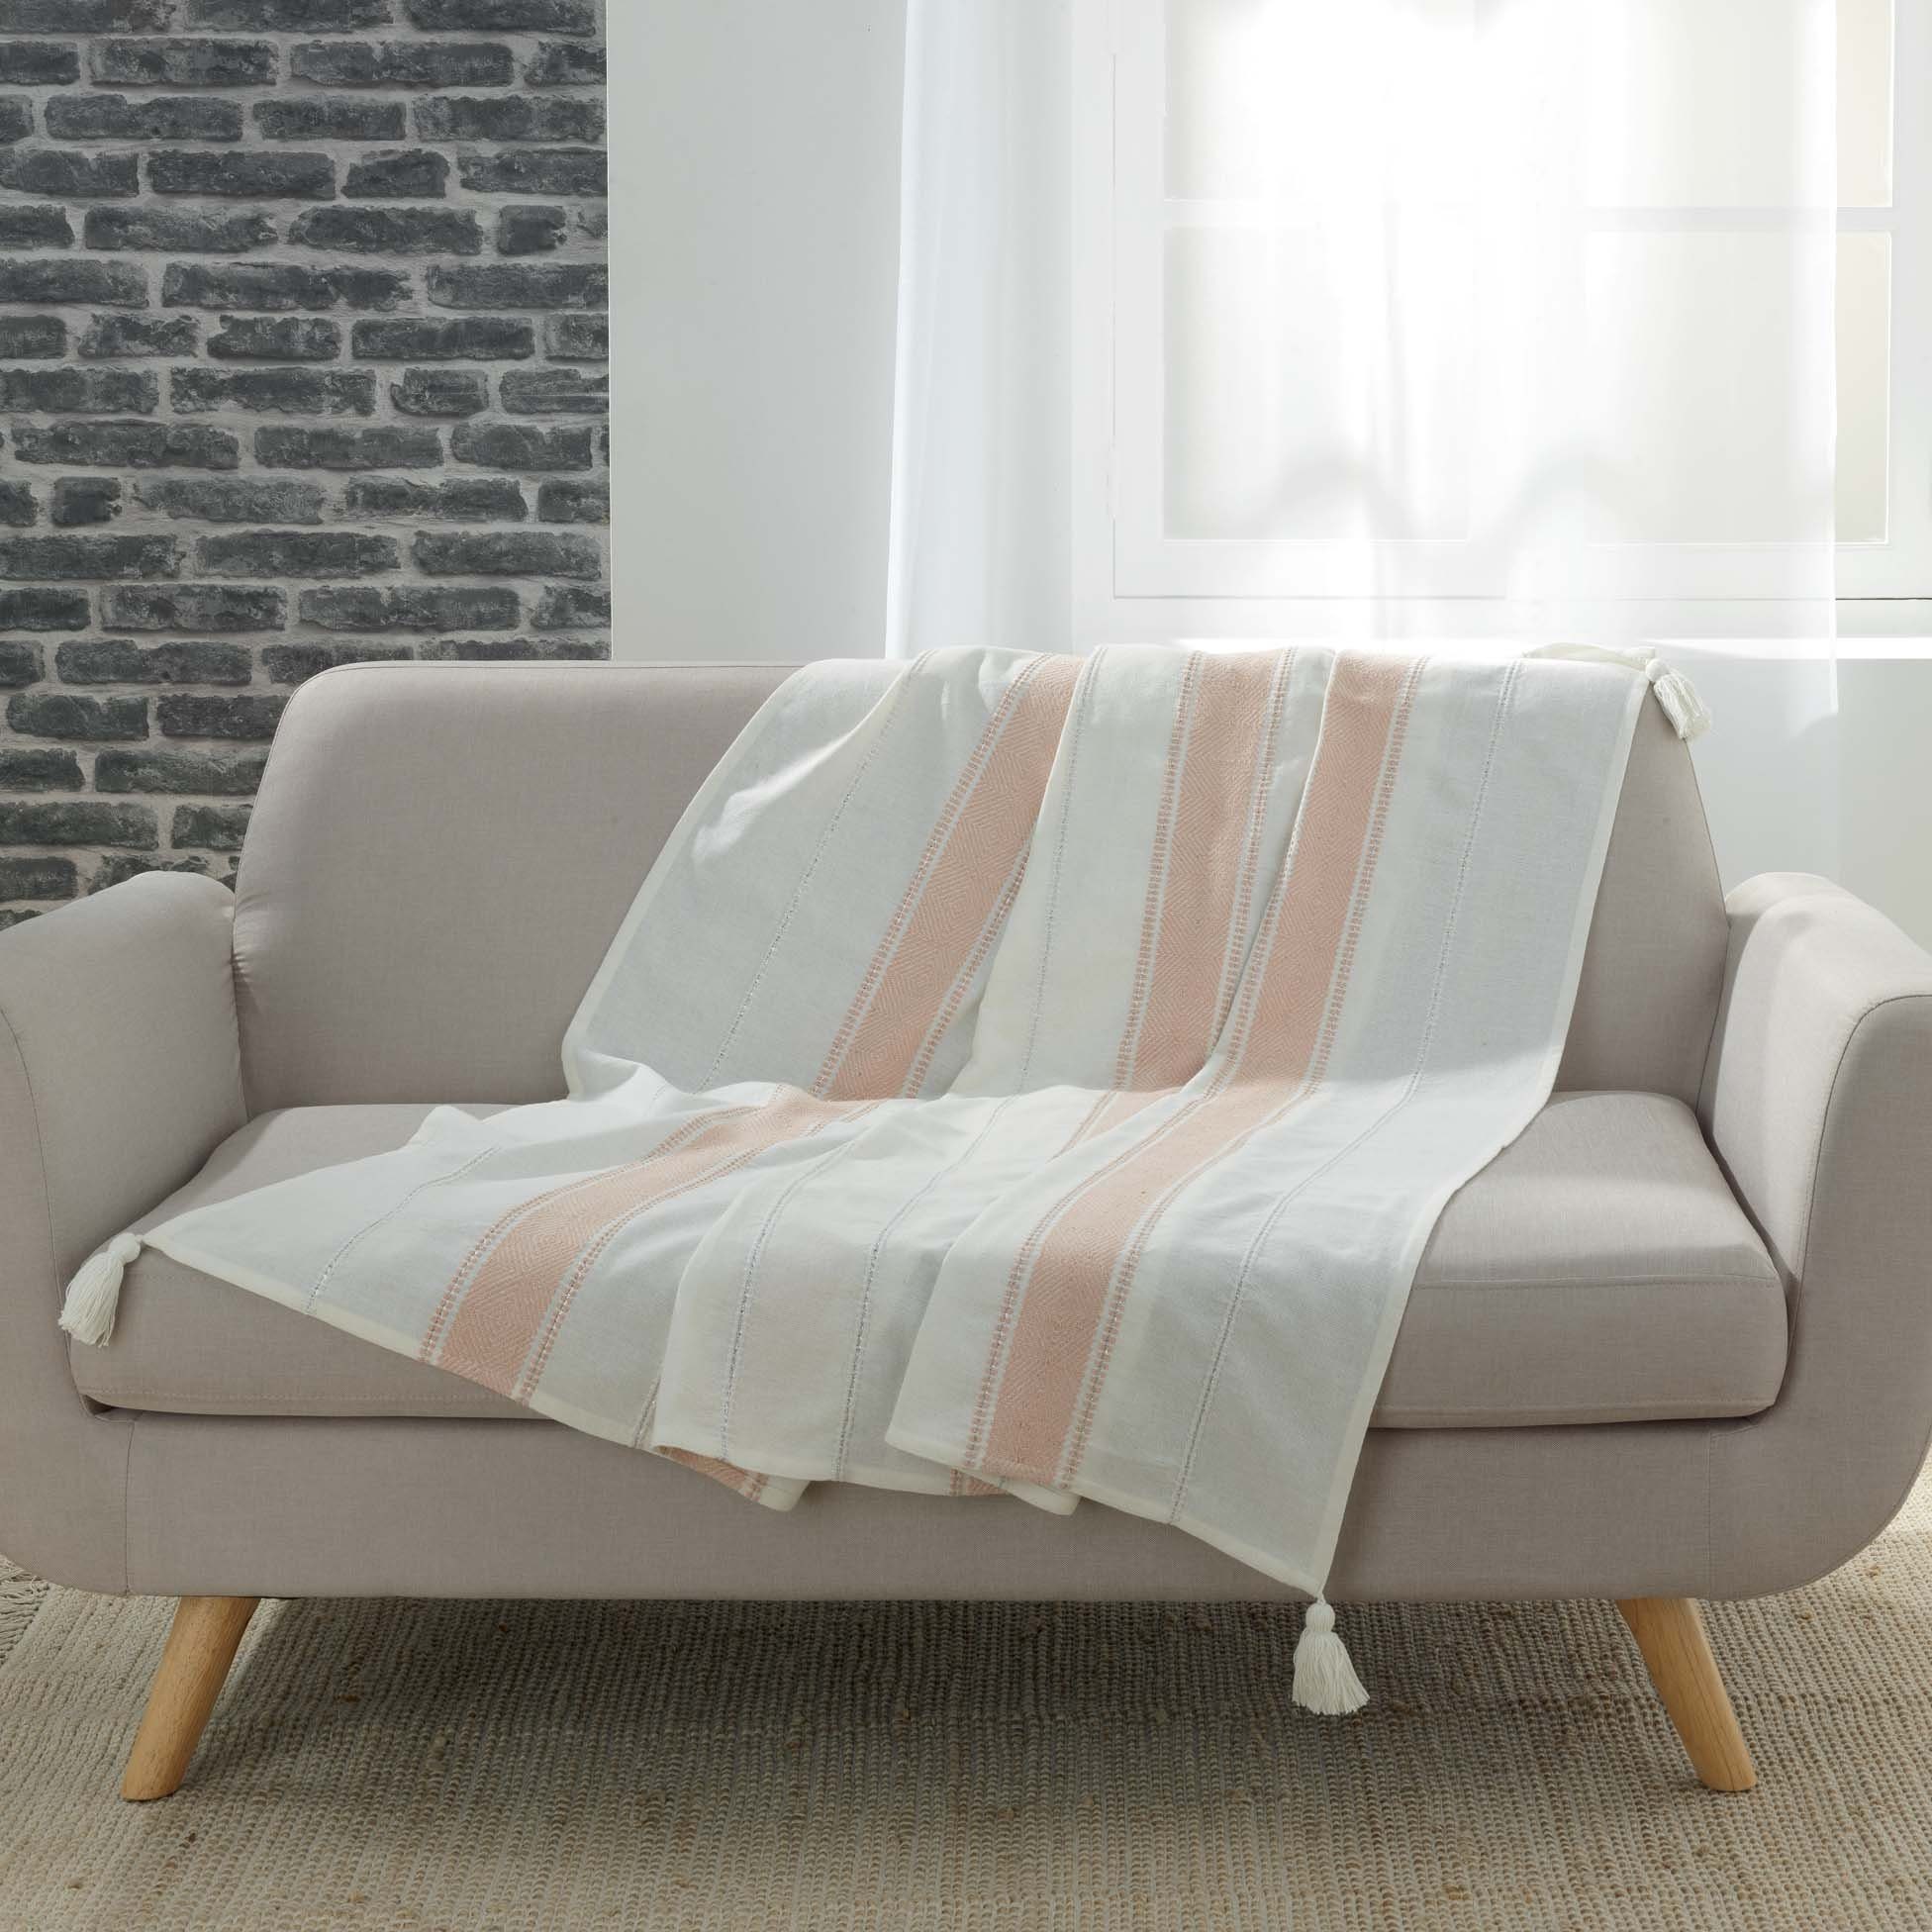 Tagesdecke, dynamic24, Baumwolle Wohndecke 125x150 Kuscheldecke Sofa Couch Decke Überwurf